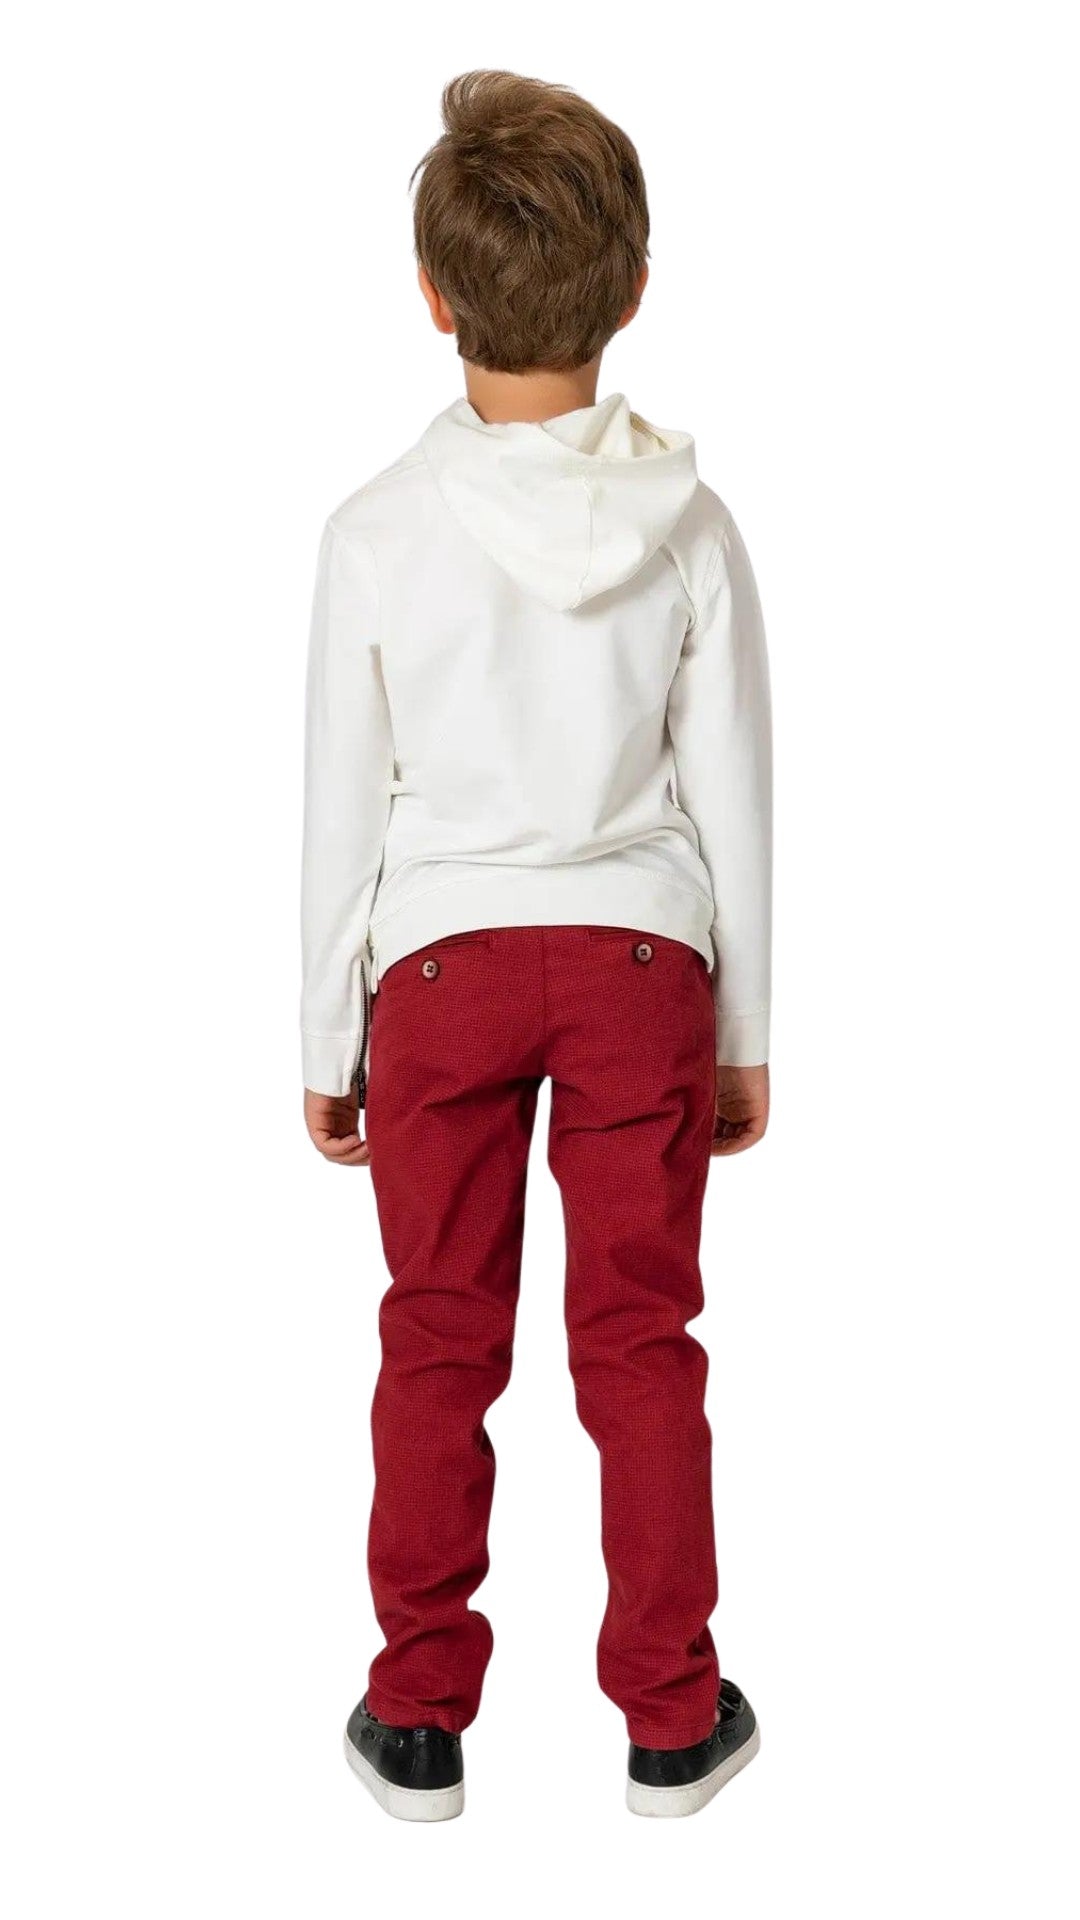 InCity Boys Tween 7-14 Years Casual White Red Cotton Long Sleeve Hoodie Milano Fashion Sweatshirts InCity Boys & Girls